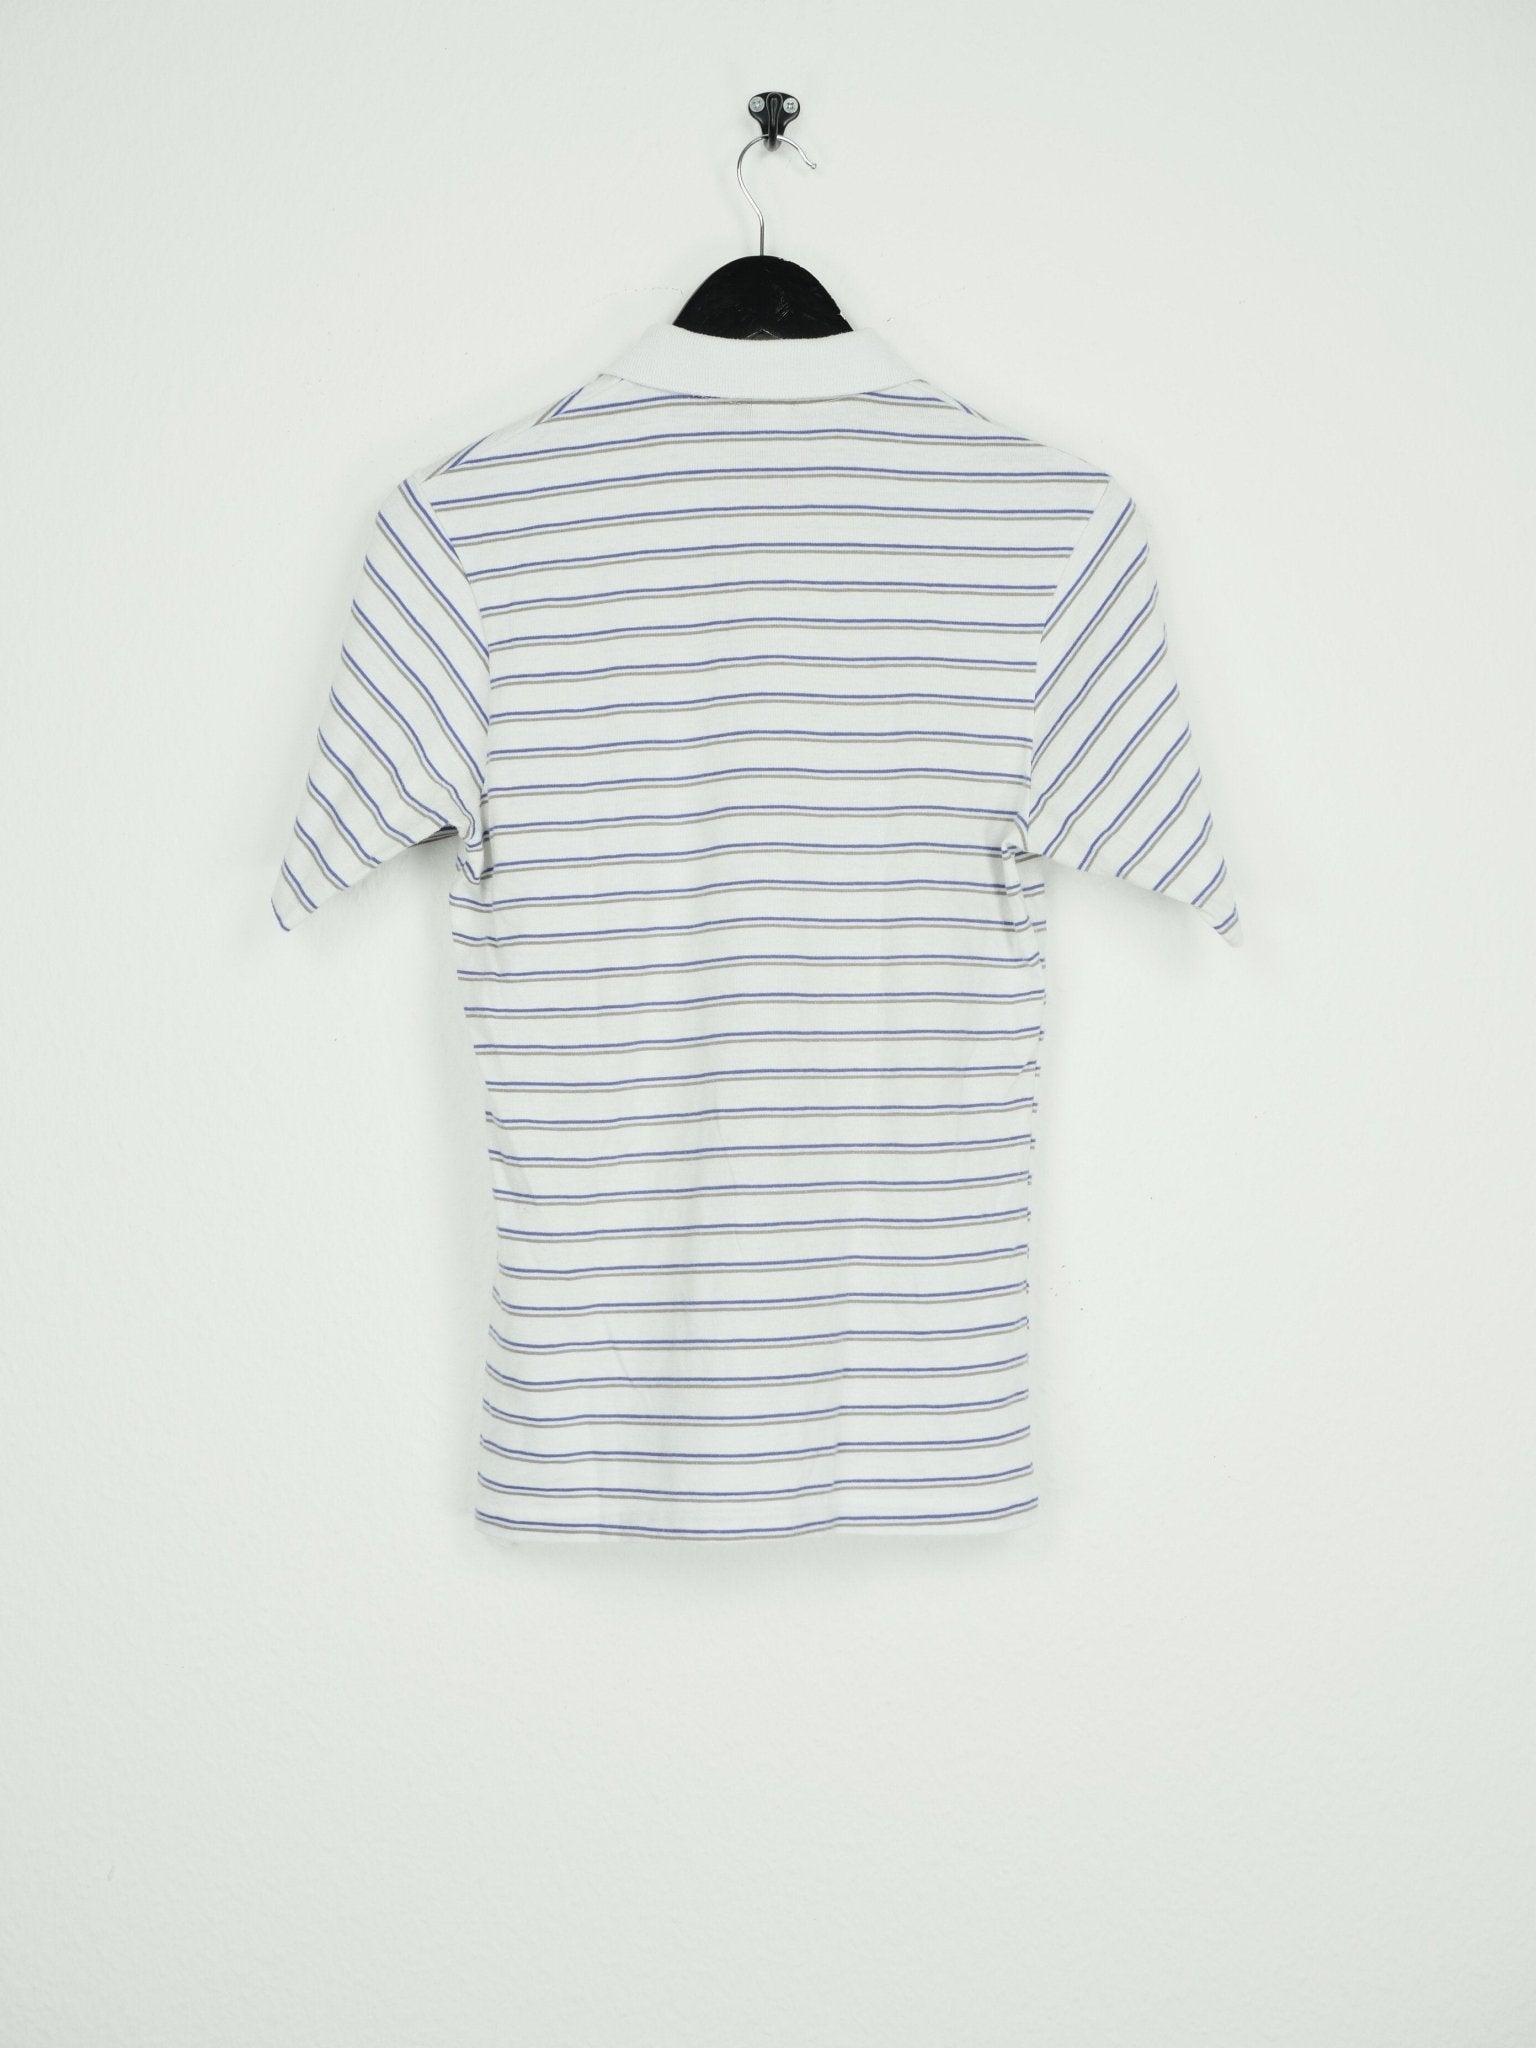 Wrangler striped single stitched Vintage Polo Shirt - Peeces